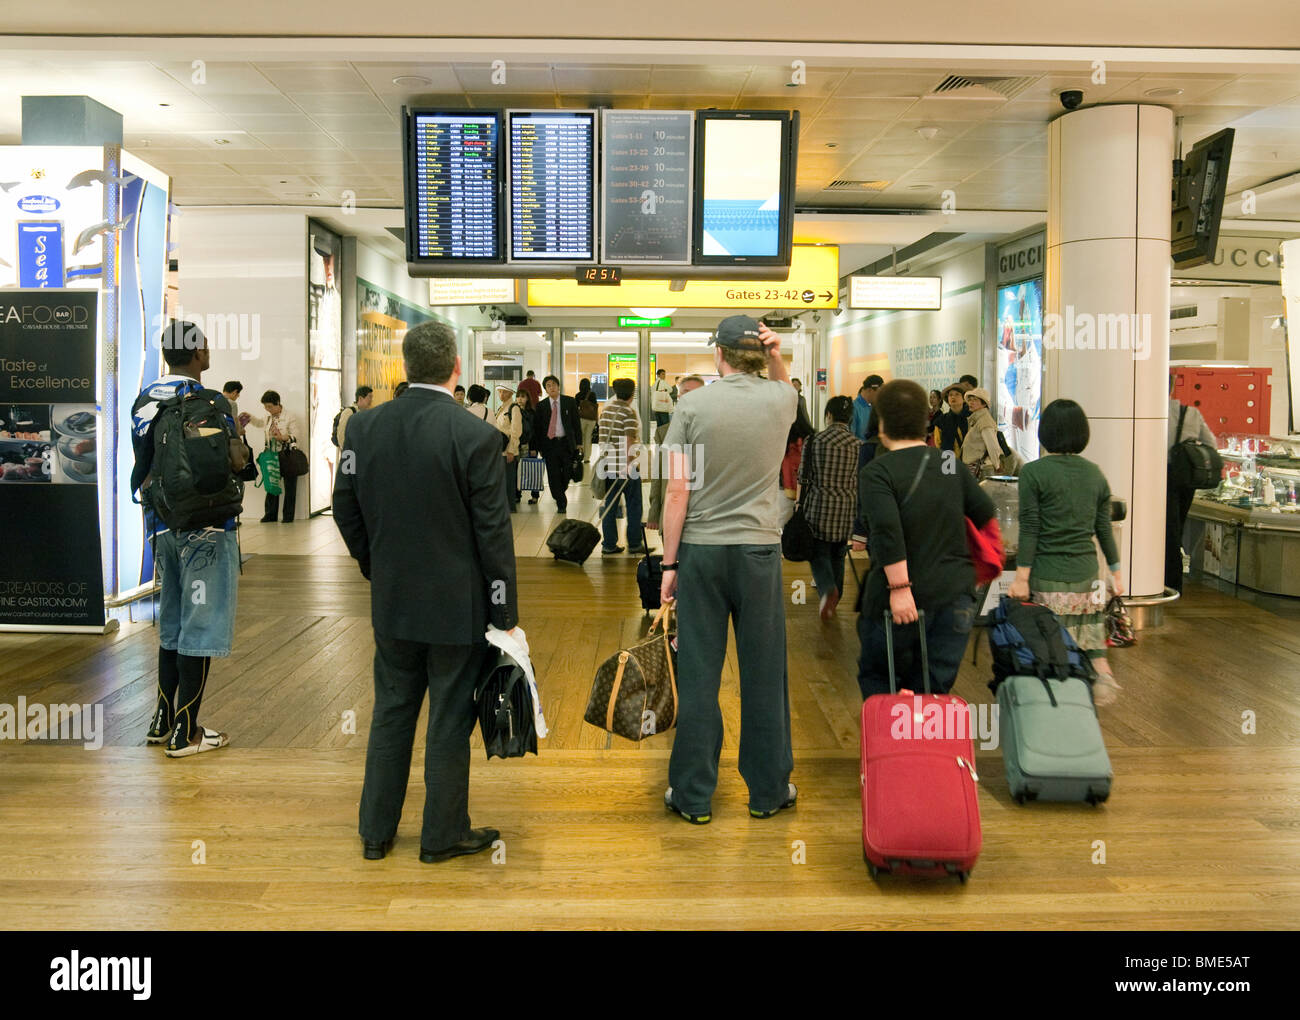 Passengers waiting for their flight, Terminal 3, Heathrow airport London UK Stock Photo